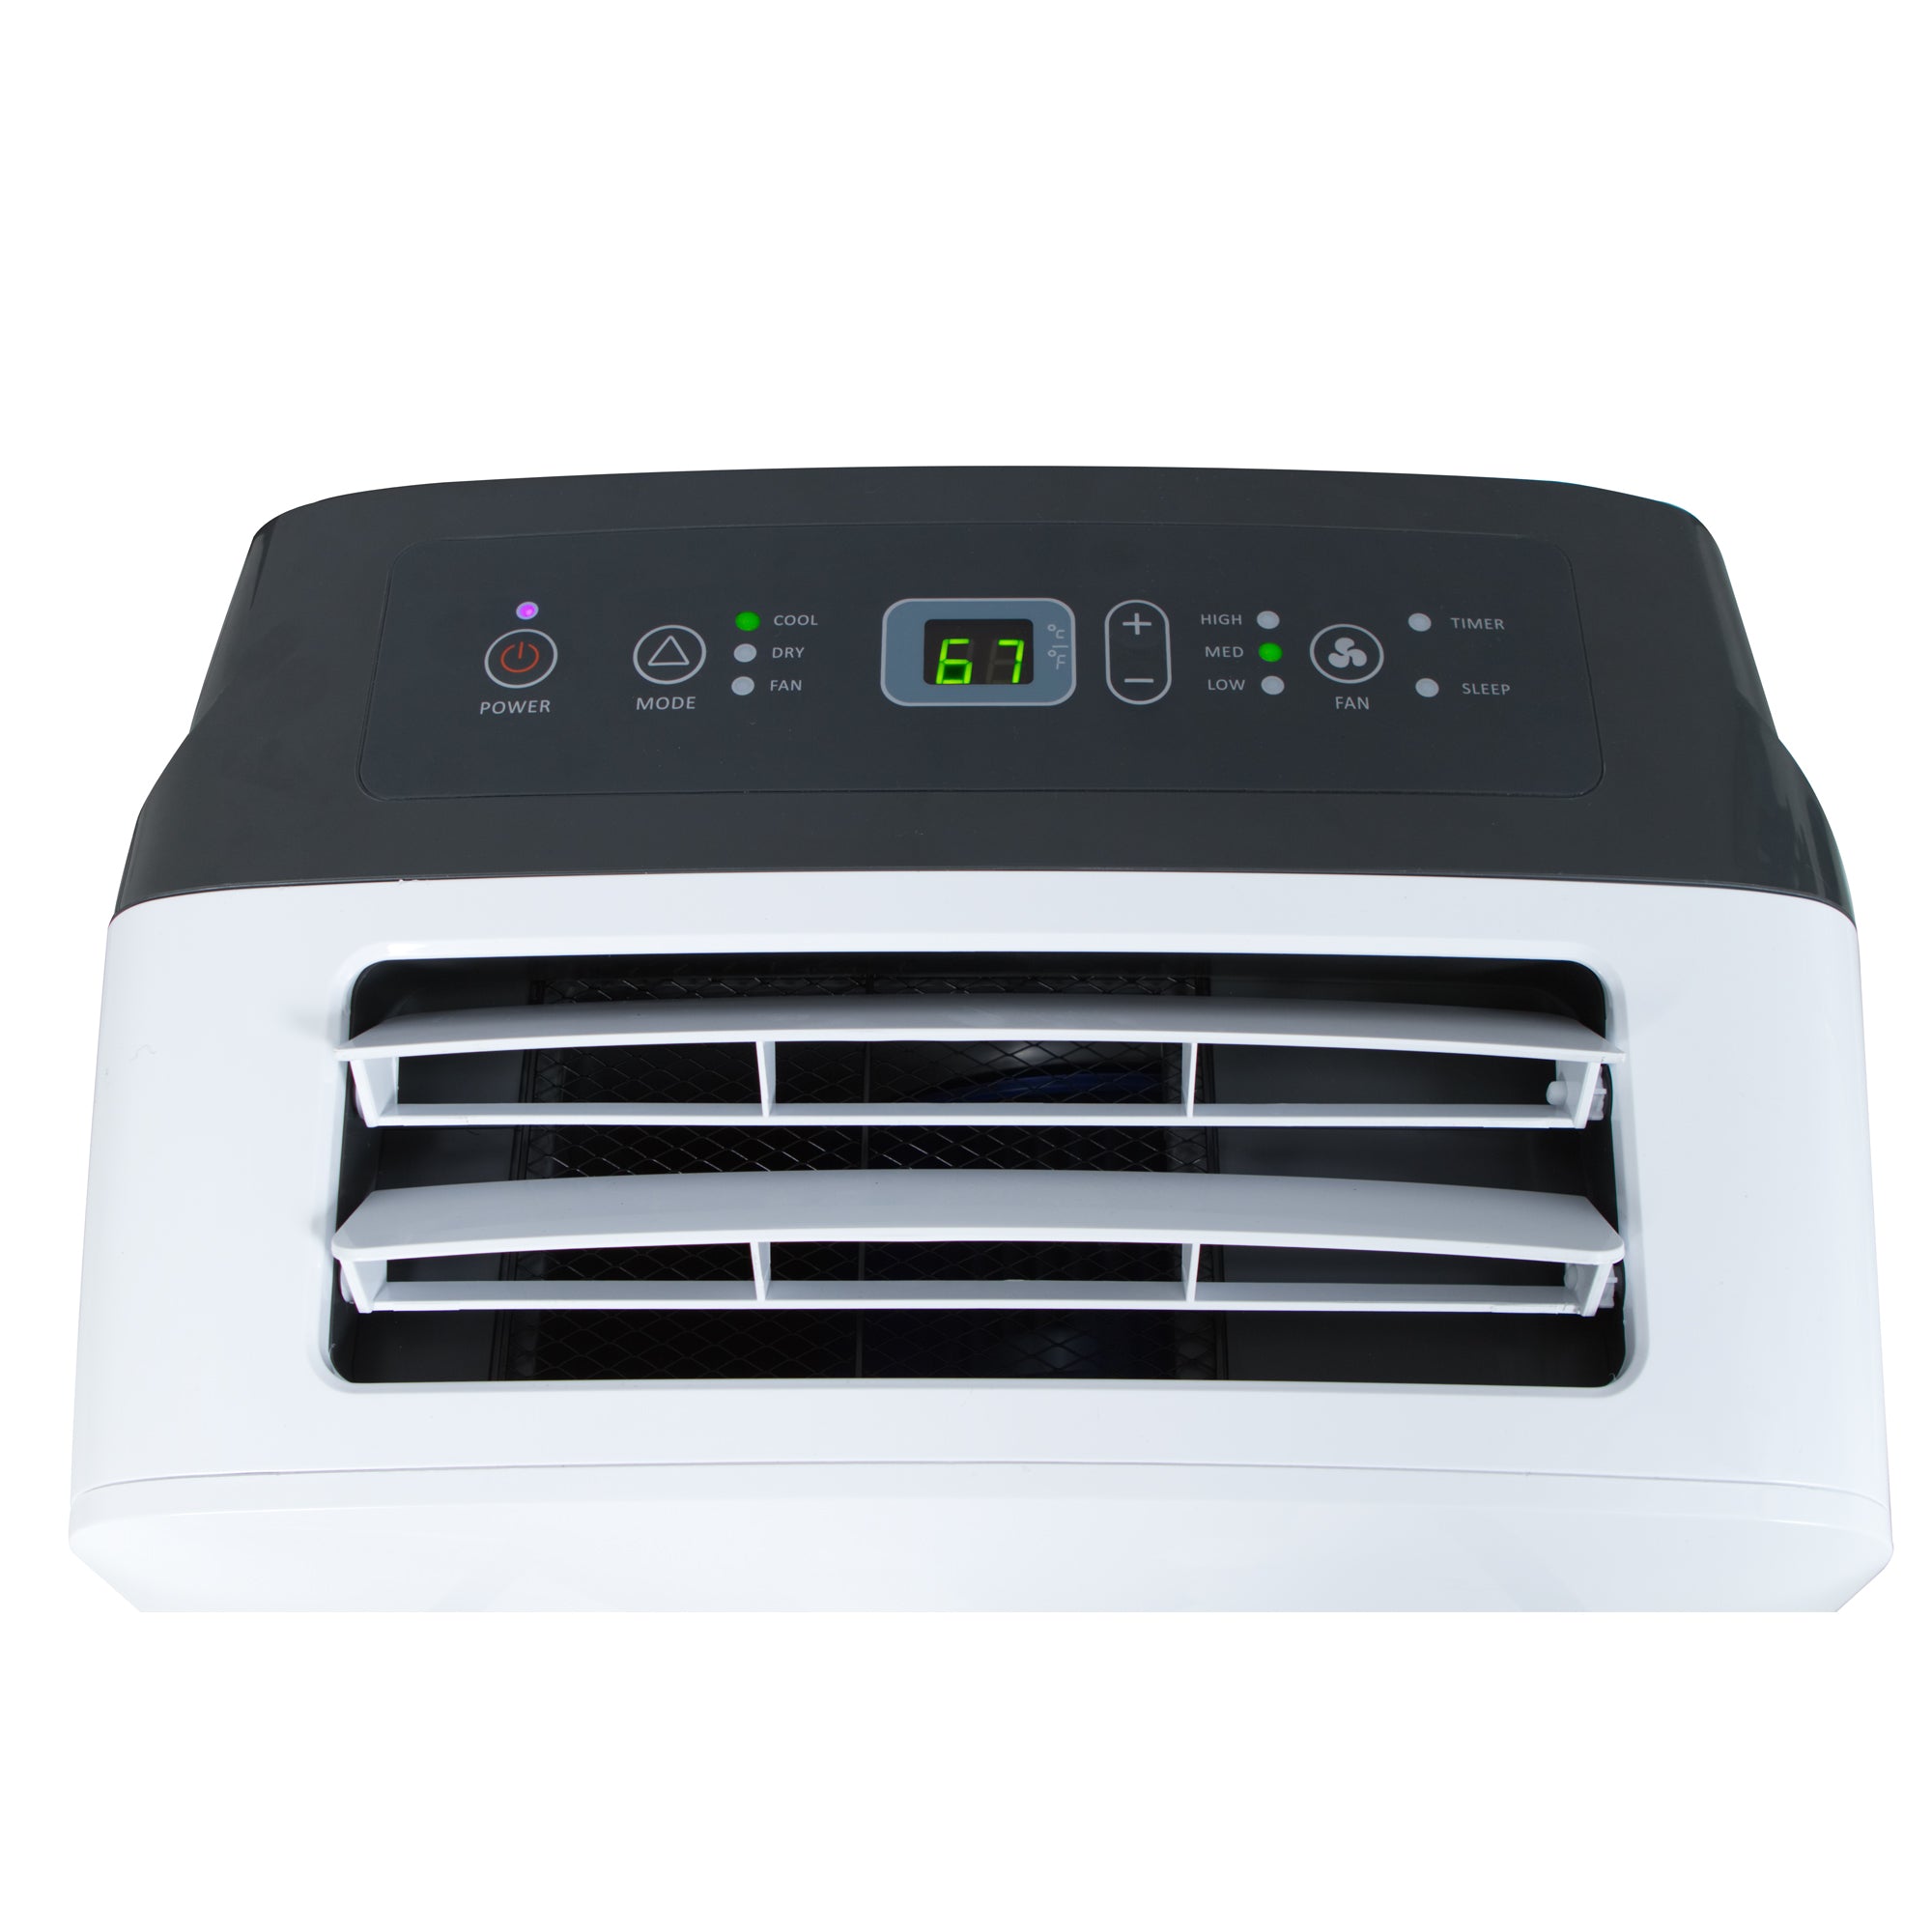 Portable Air Conditioner With Remote Control